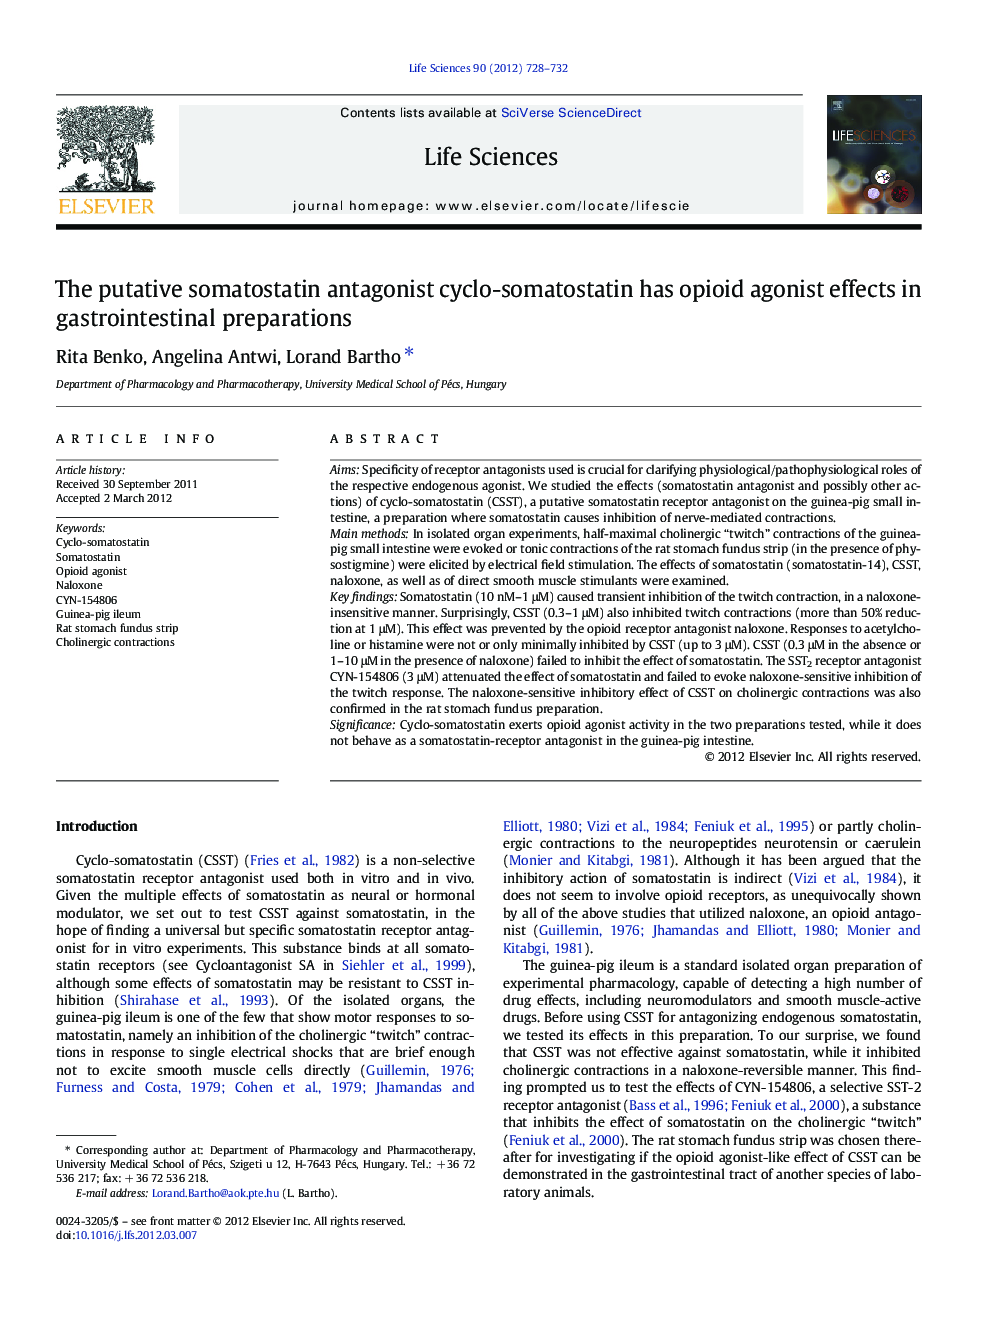 The putative somatostatin antagonist cyclo-somatostatin has opioid agonist effects in gastrointestinal preparations